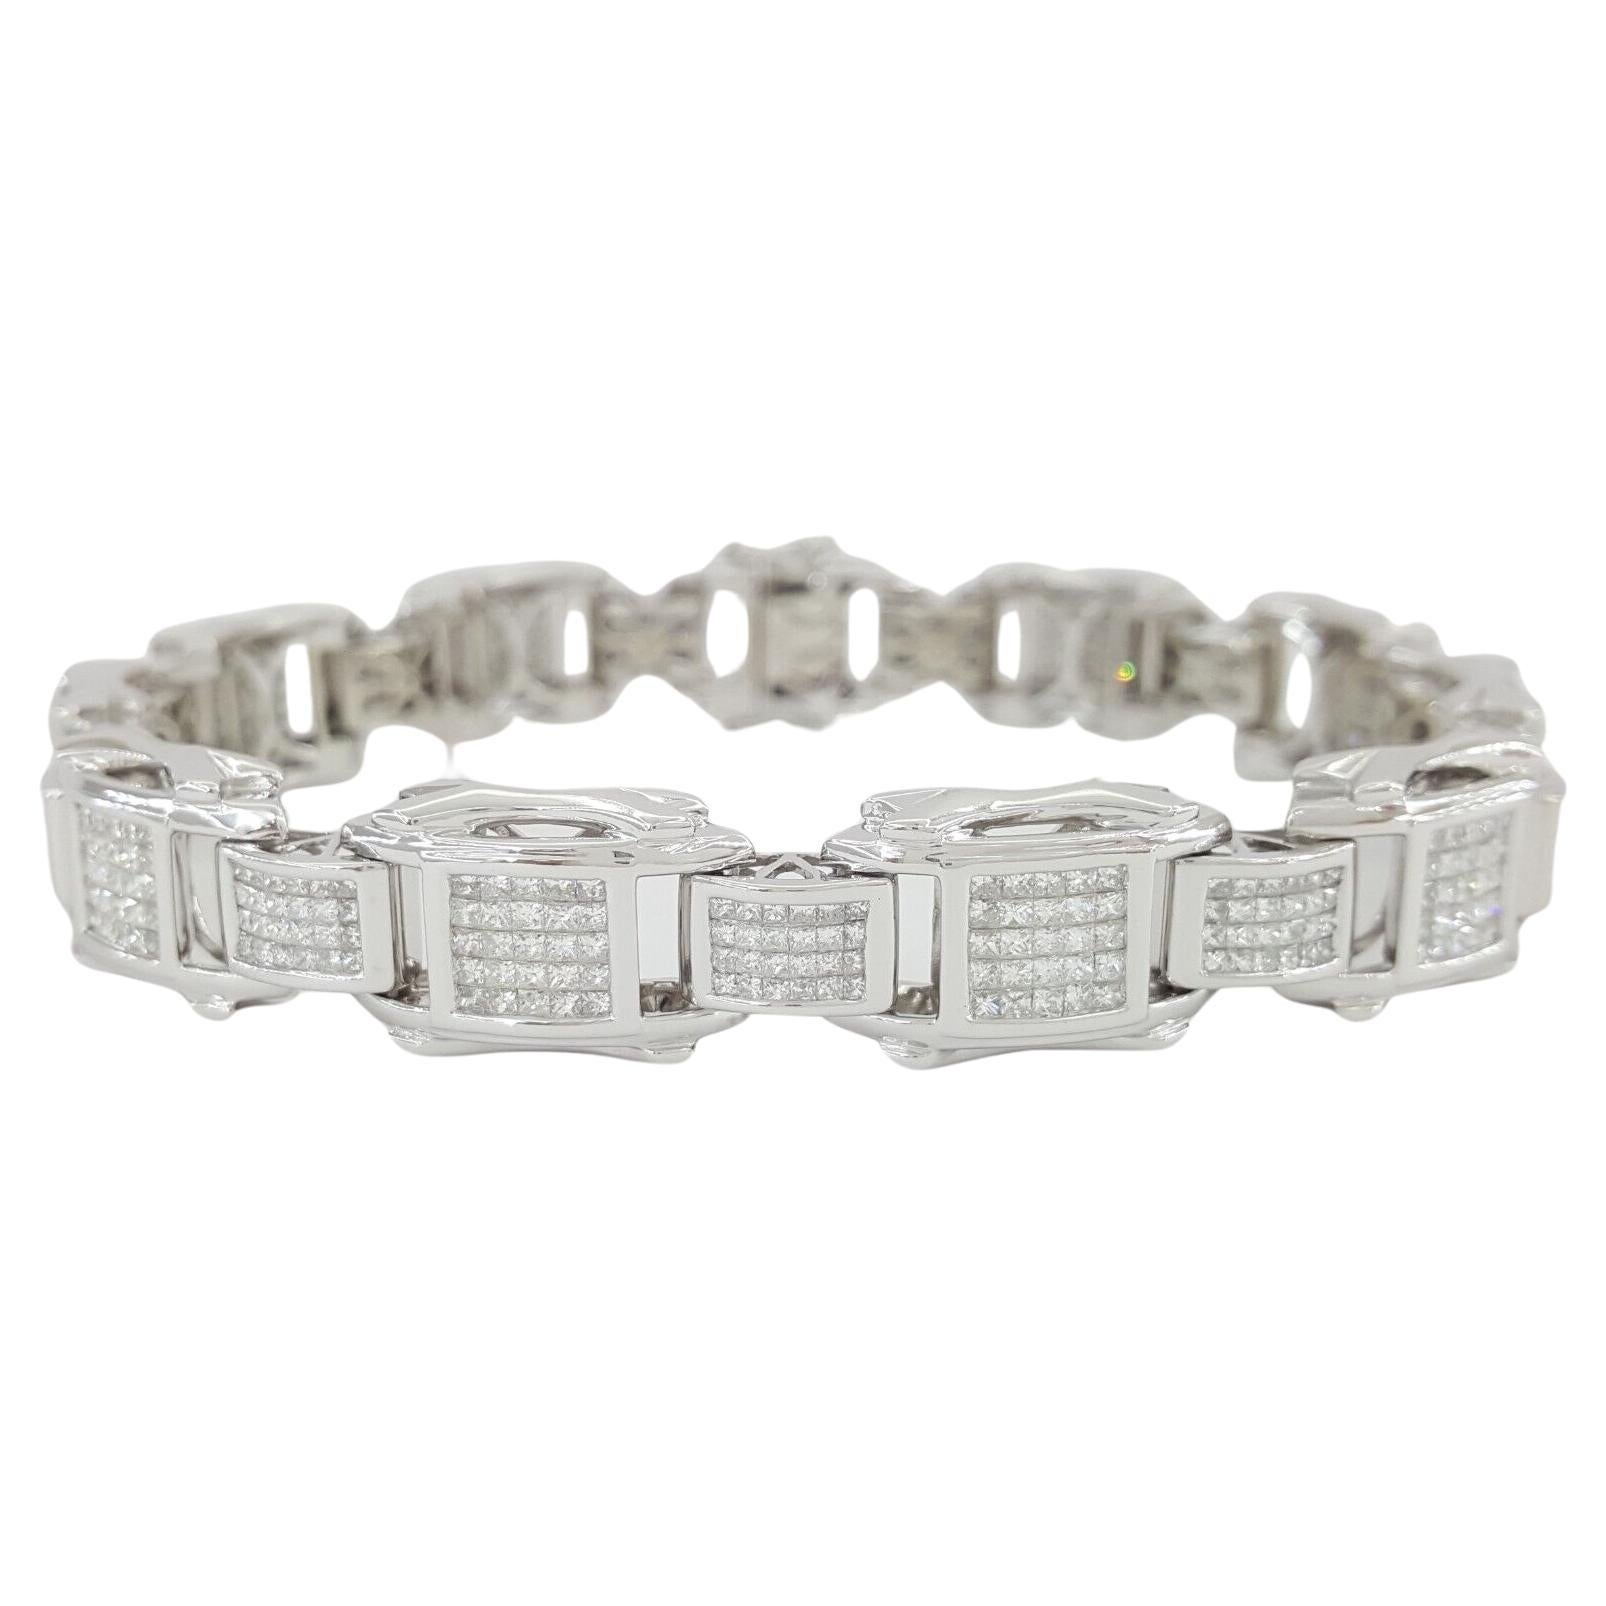  9 Carat Diamond Men's Bracelet